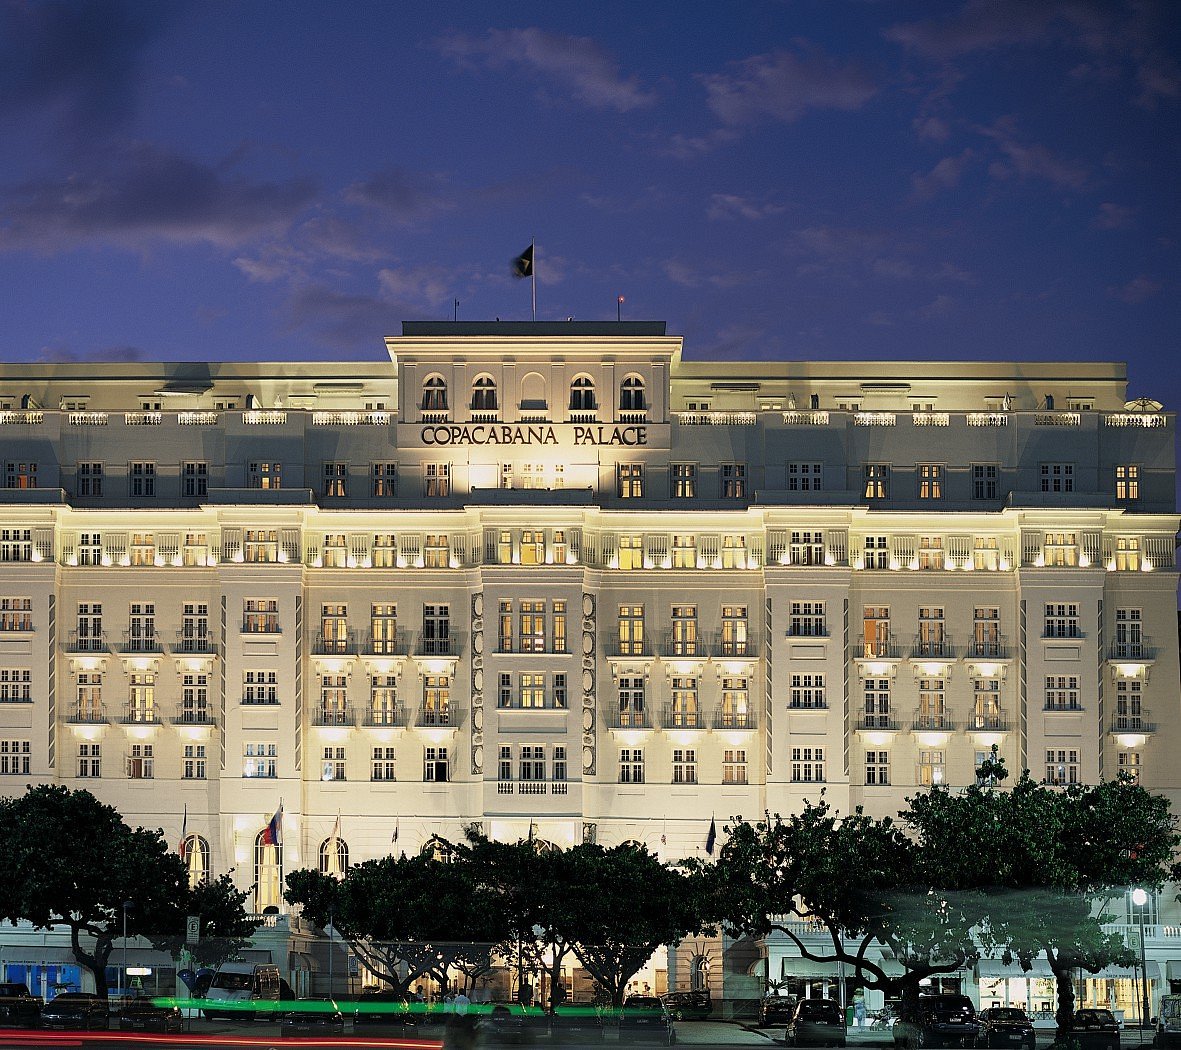 the Best Hotels in brazil